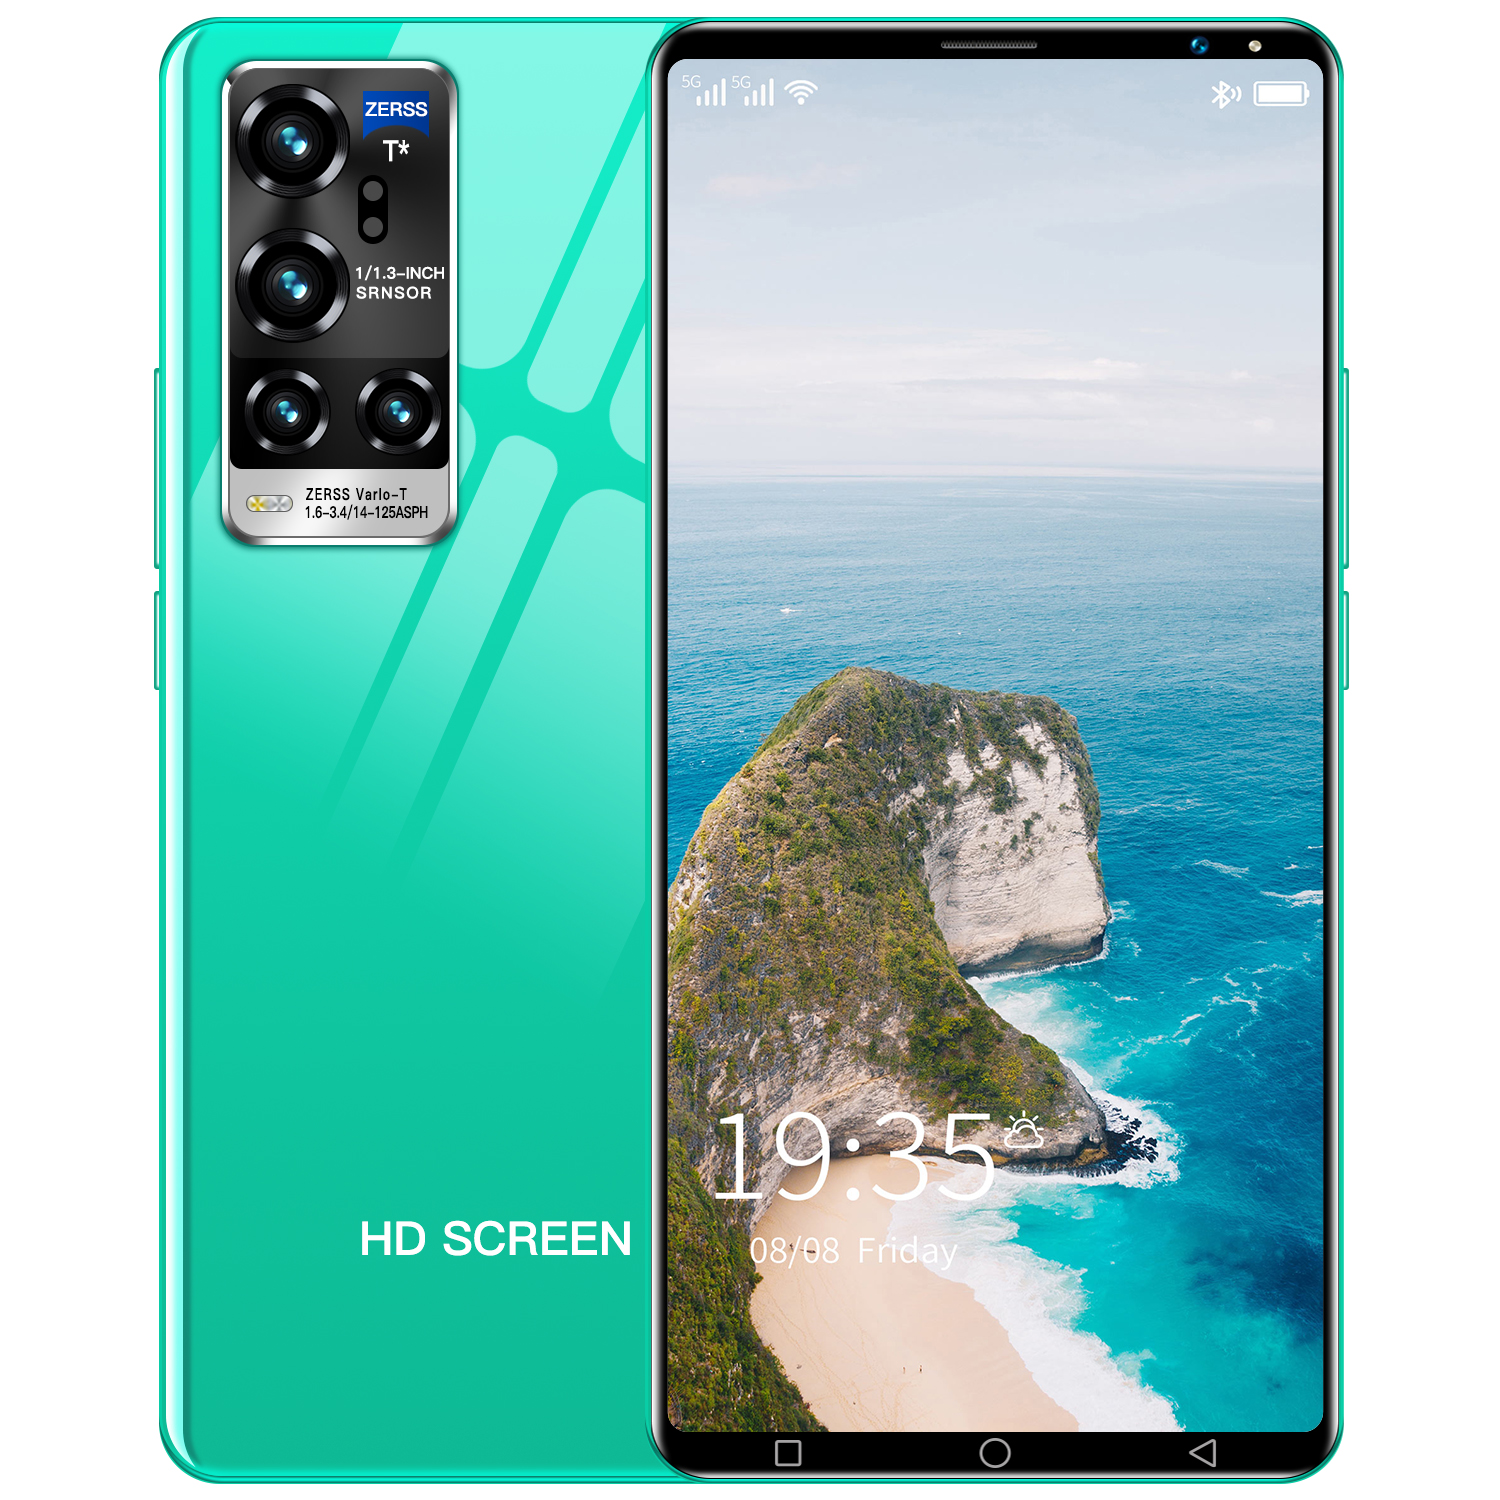 【COD】X60 Pro โทรศัพท์ราคาถูก 7.5 นิ้ว 12GB RAM + 512GB ROM โทรศัพท์มือถือ จอใหญ่ มือถือ New smartphone Android10 5G phone รองรับเกม Mobile phone full HD screen สมาร์ทโฟน มือถือราคา